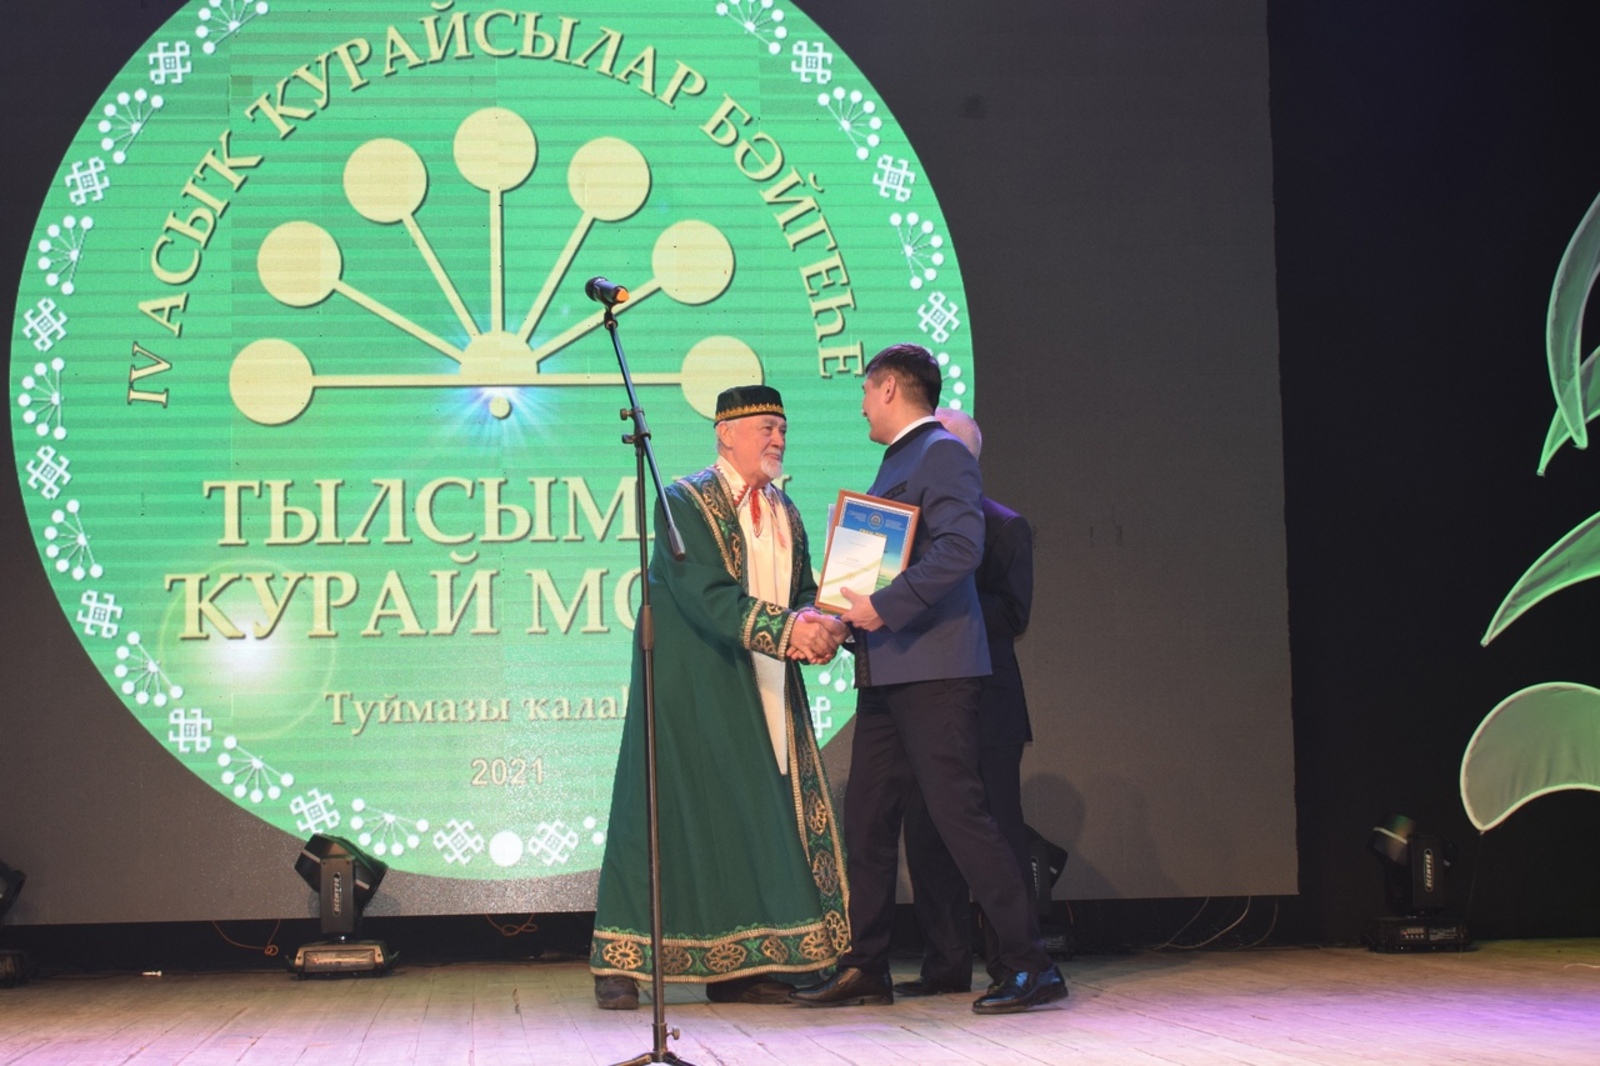 Гран-при конкурса кураистов  в Белорецке!